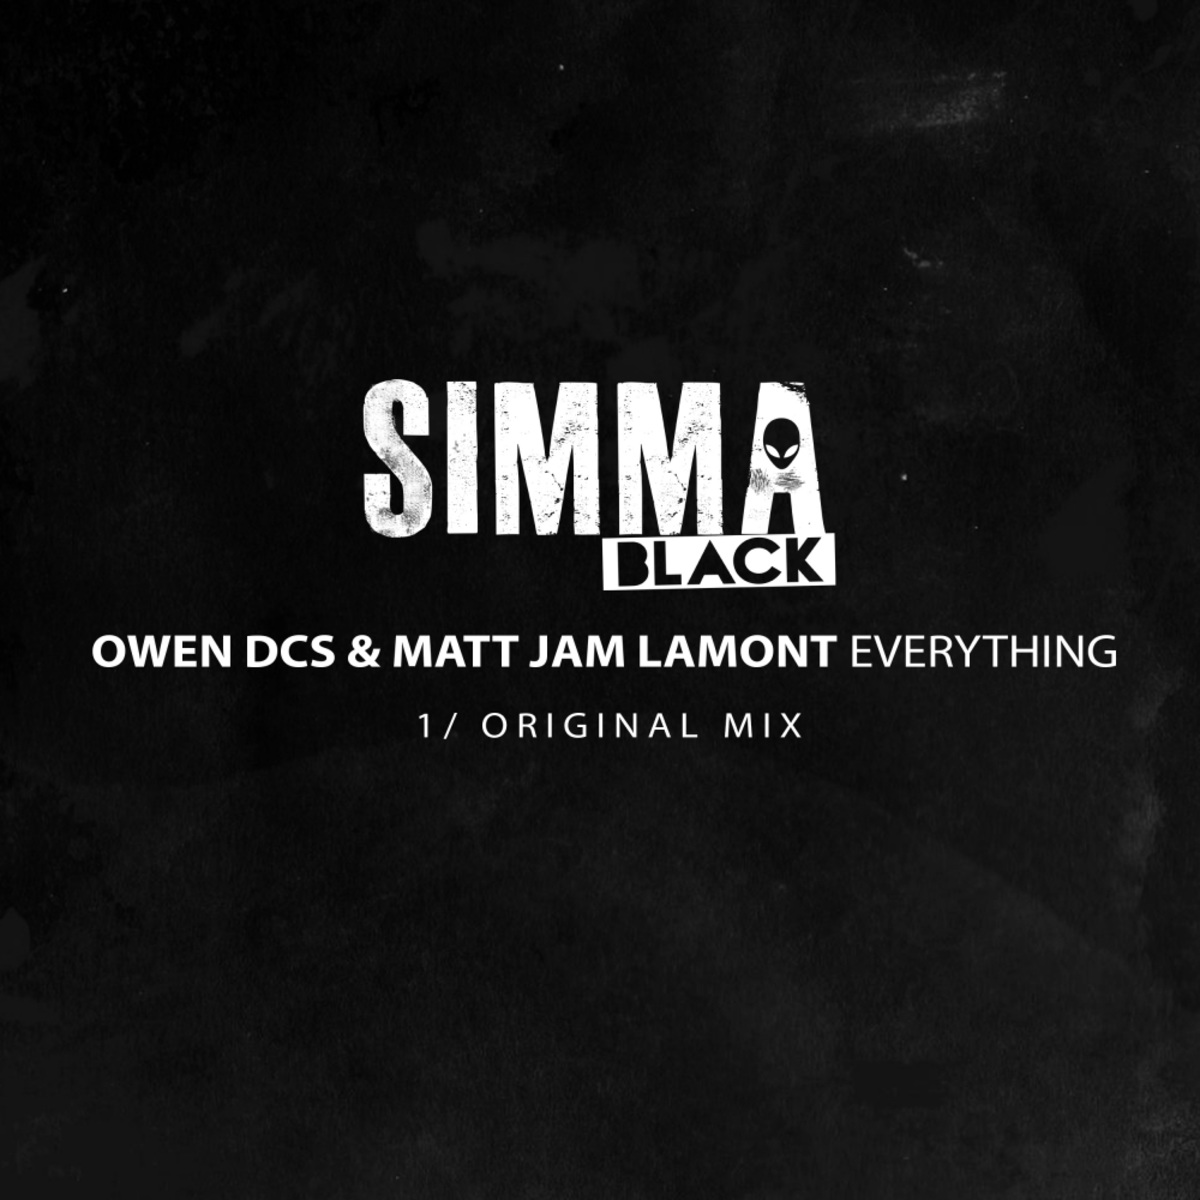 Matt Jam Lamont & Owen DCS - Everything / Simma Black